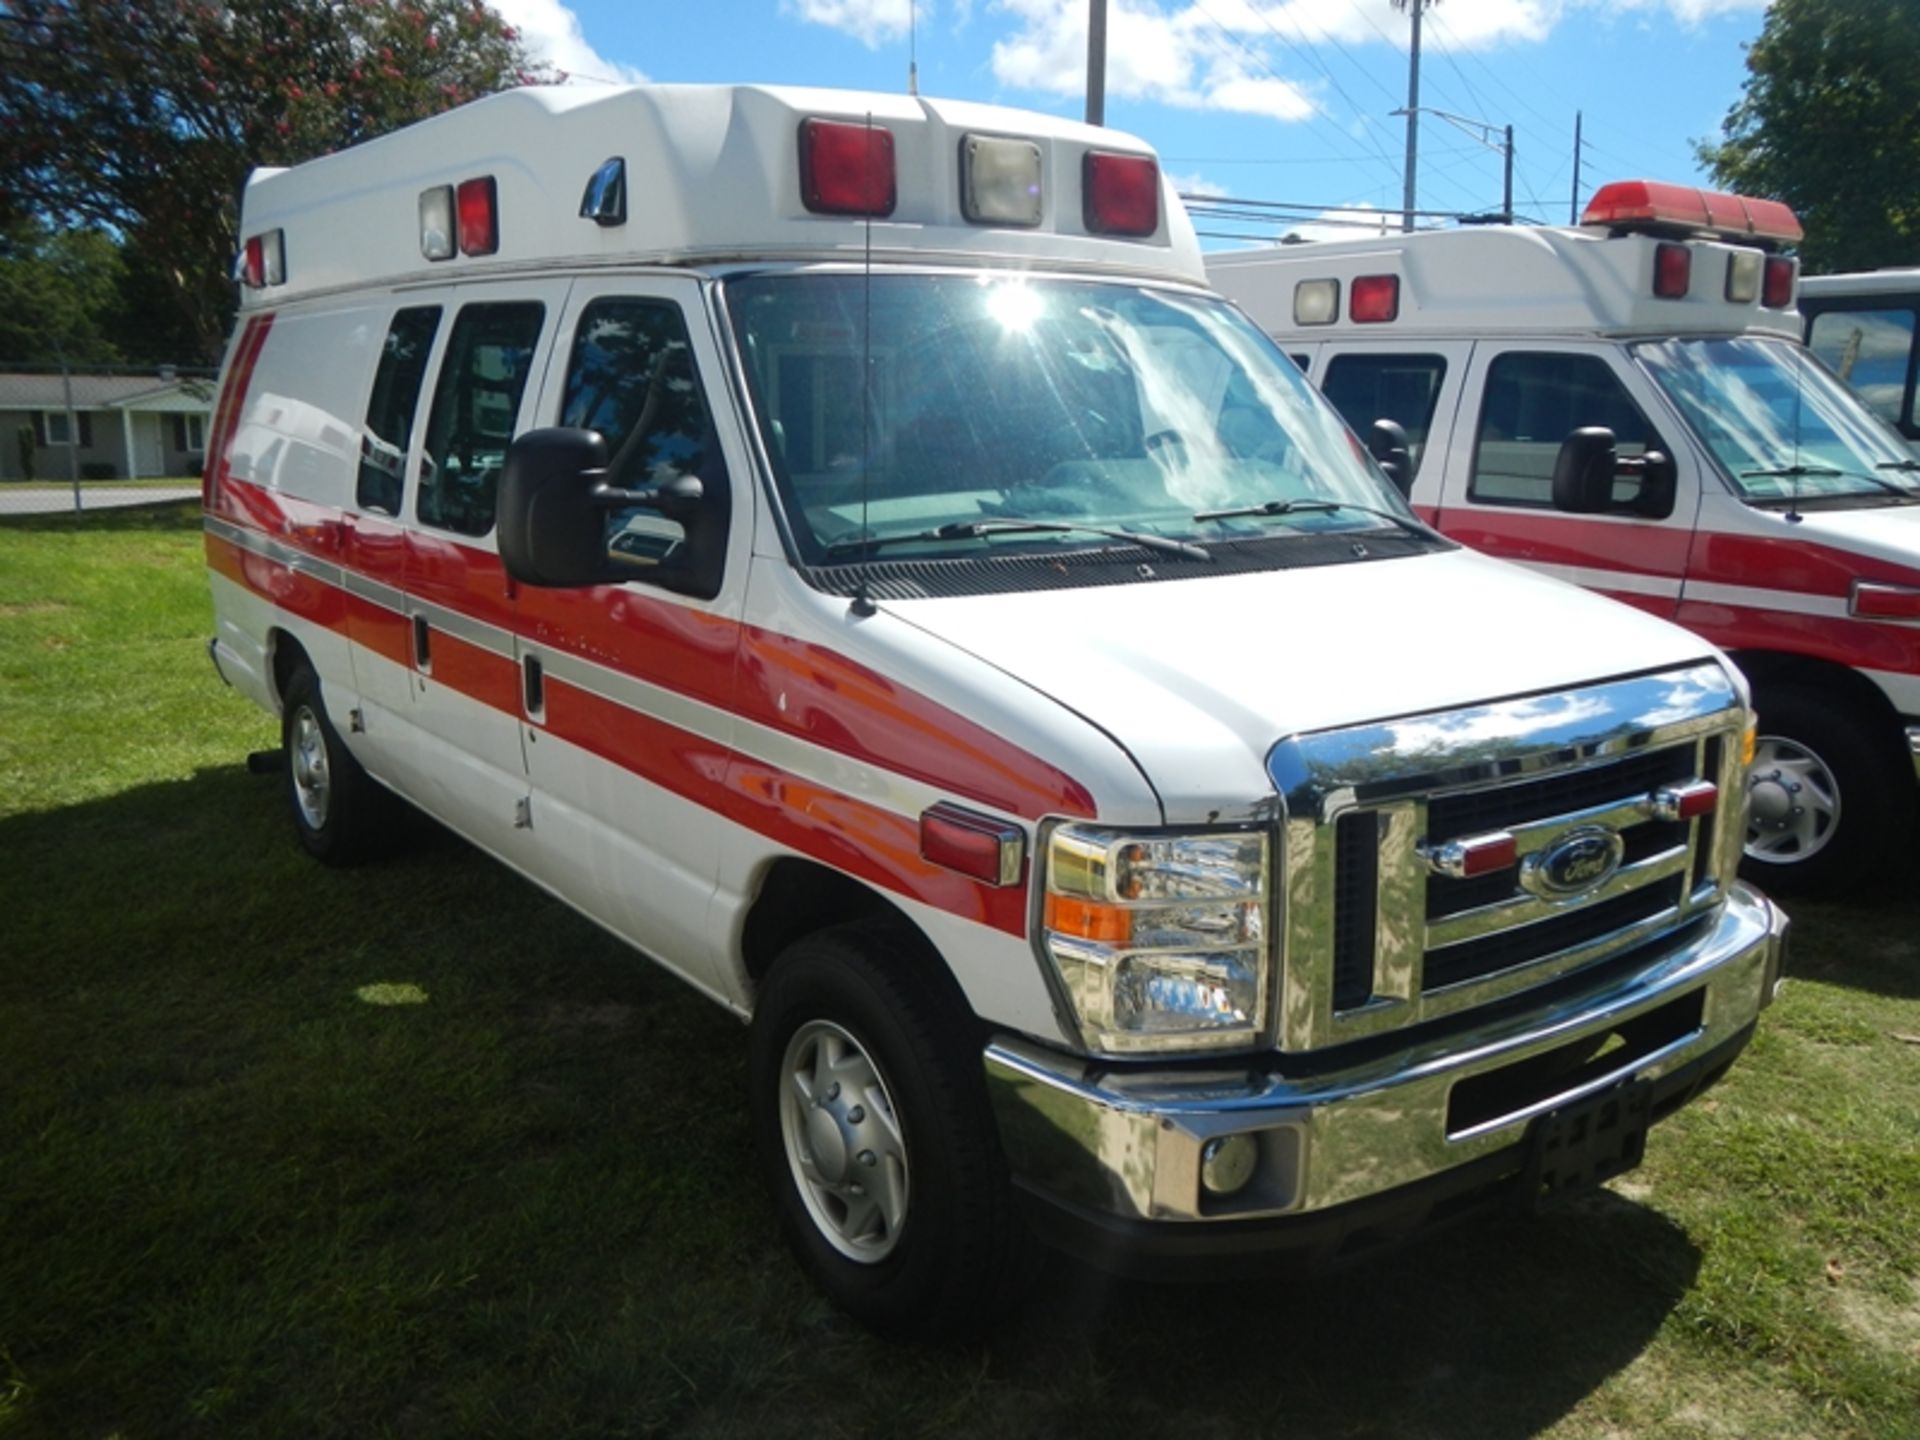 2010 FORD E-350 Super Duty Type II Ambulance, dsl 248,059 miles - VIN: 1FDSS3EP8ADA23977 - Image 2 of 6